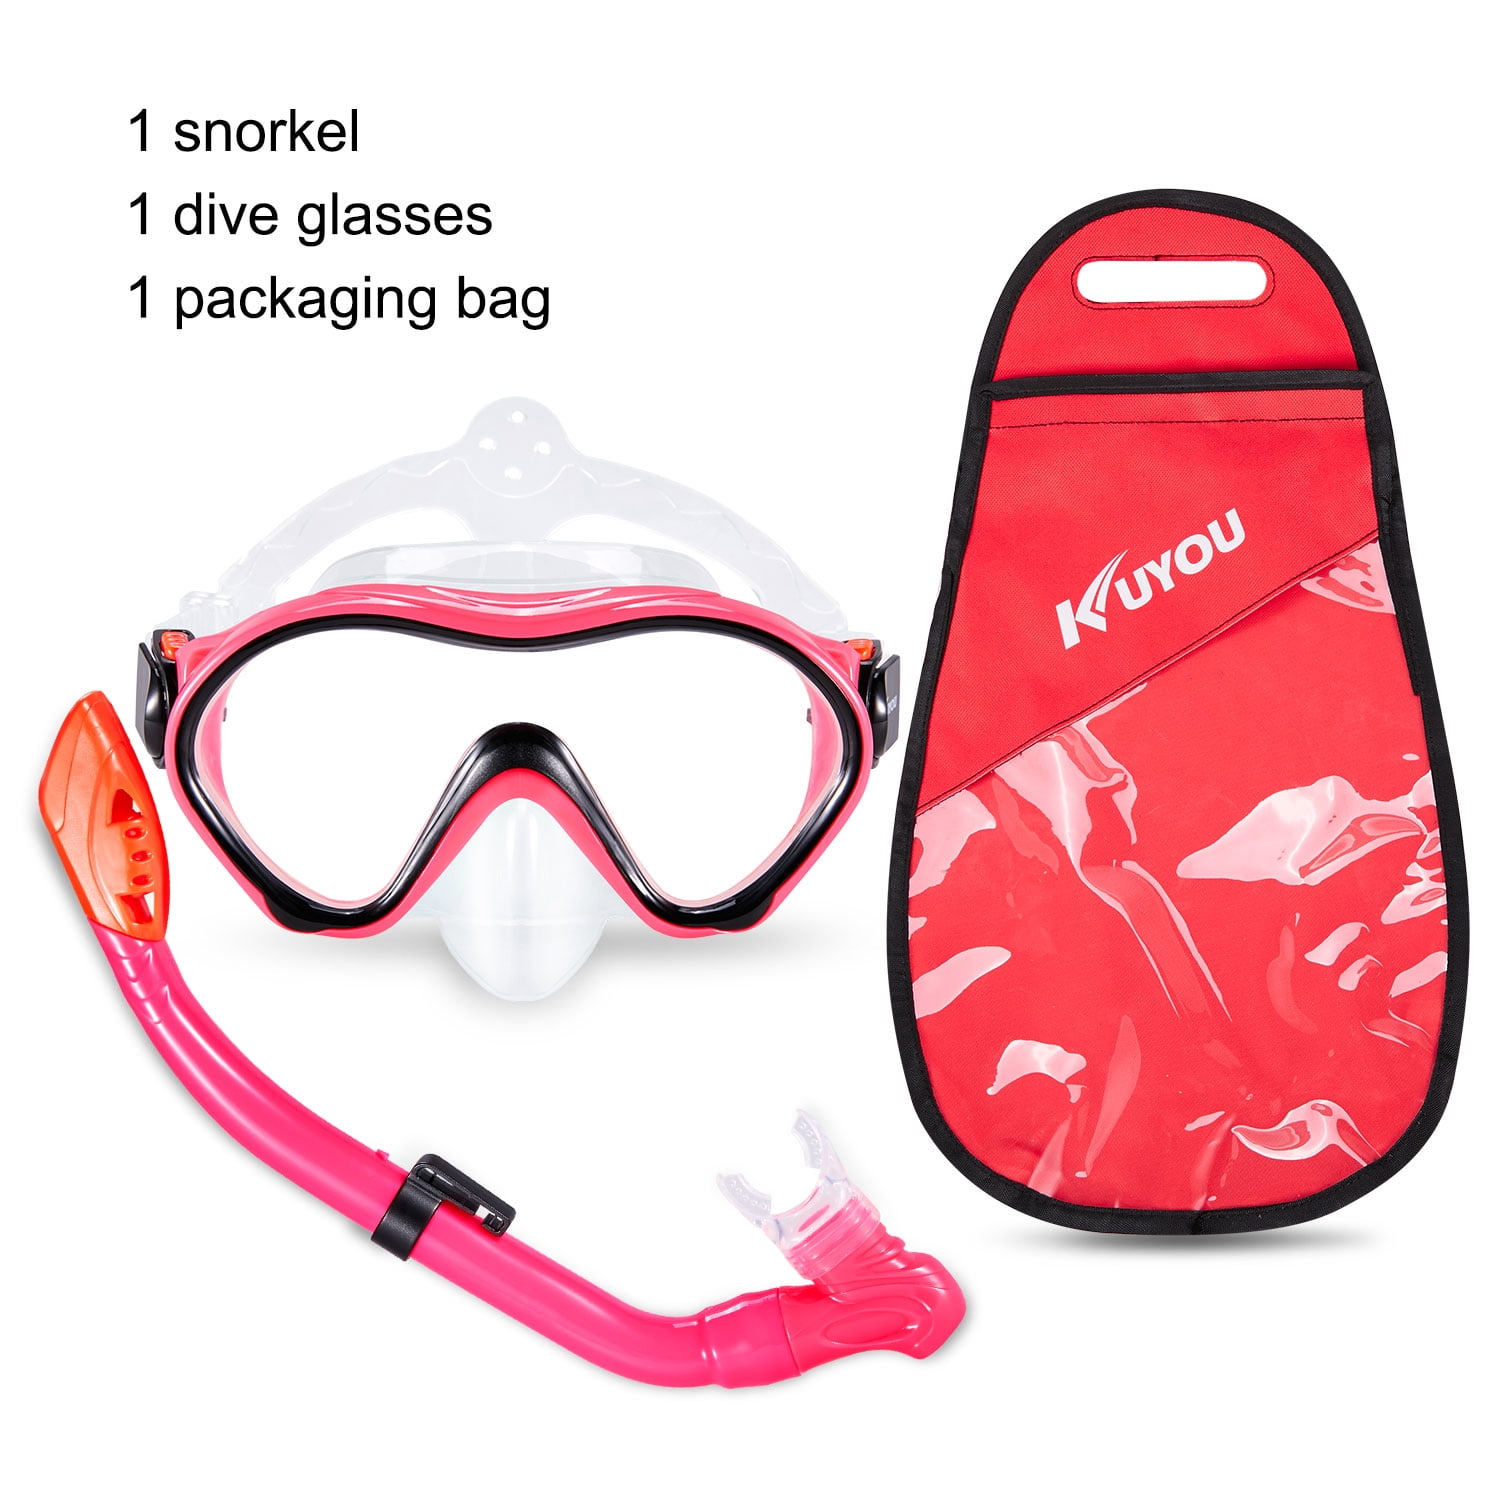 Anti-Fog and Anti-Leak Easy Adjustable Snorkeling Gear for Children KUYOU Snorkel Set for Kids,Dry Top Snorkel Mask Boys & Girls,Juniors Freediving Gear Set Age 5. 